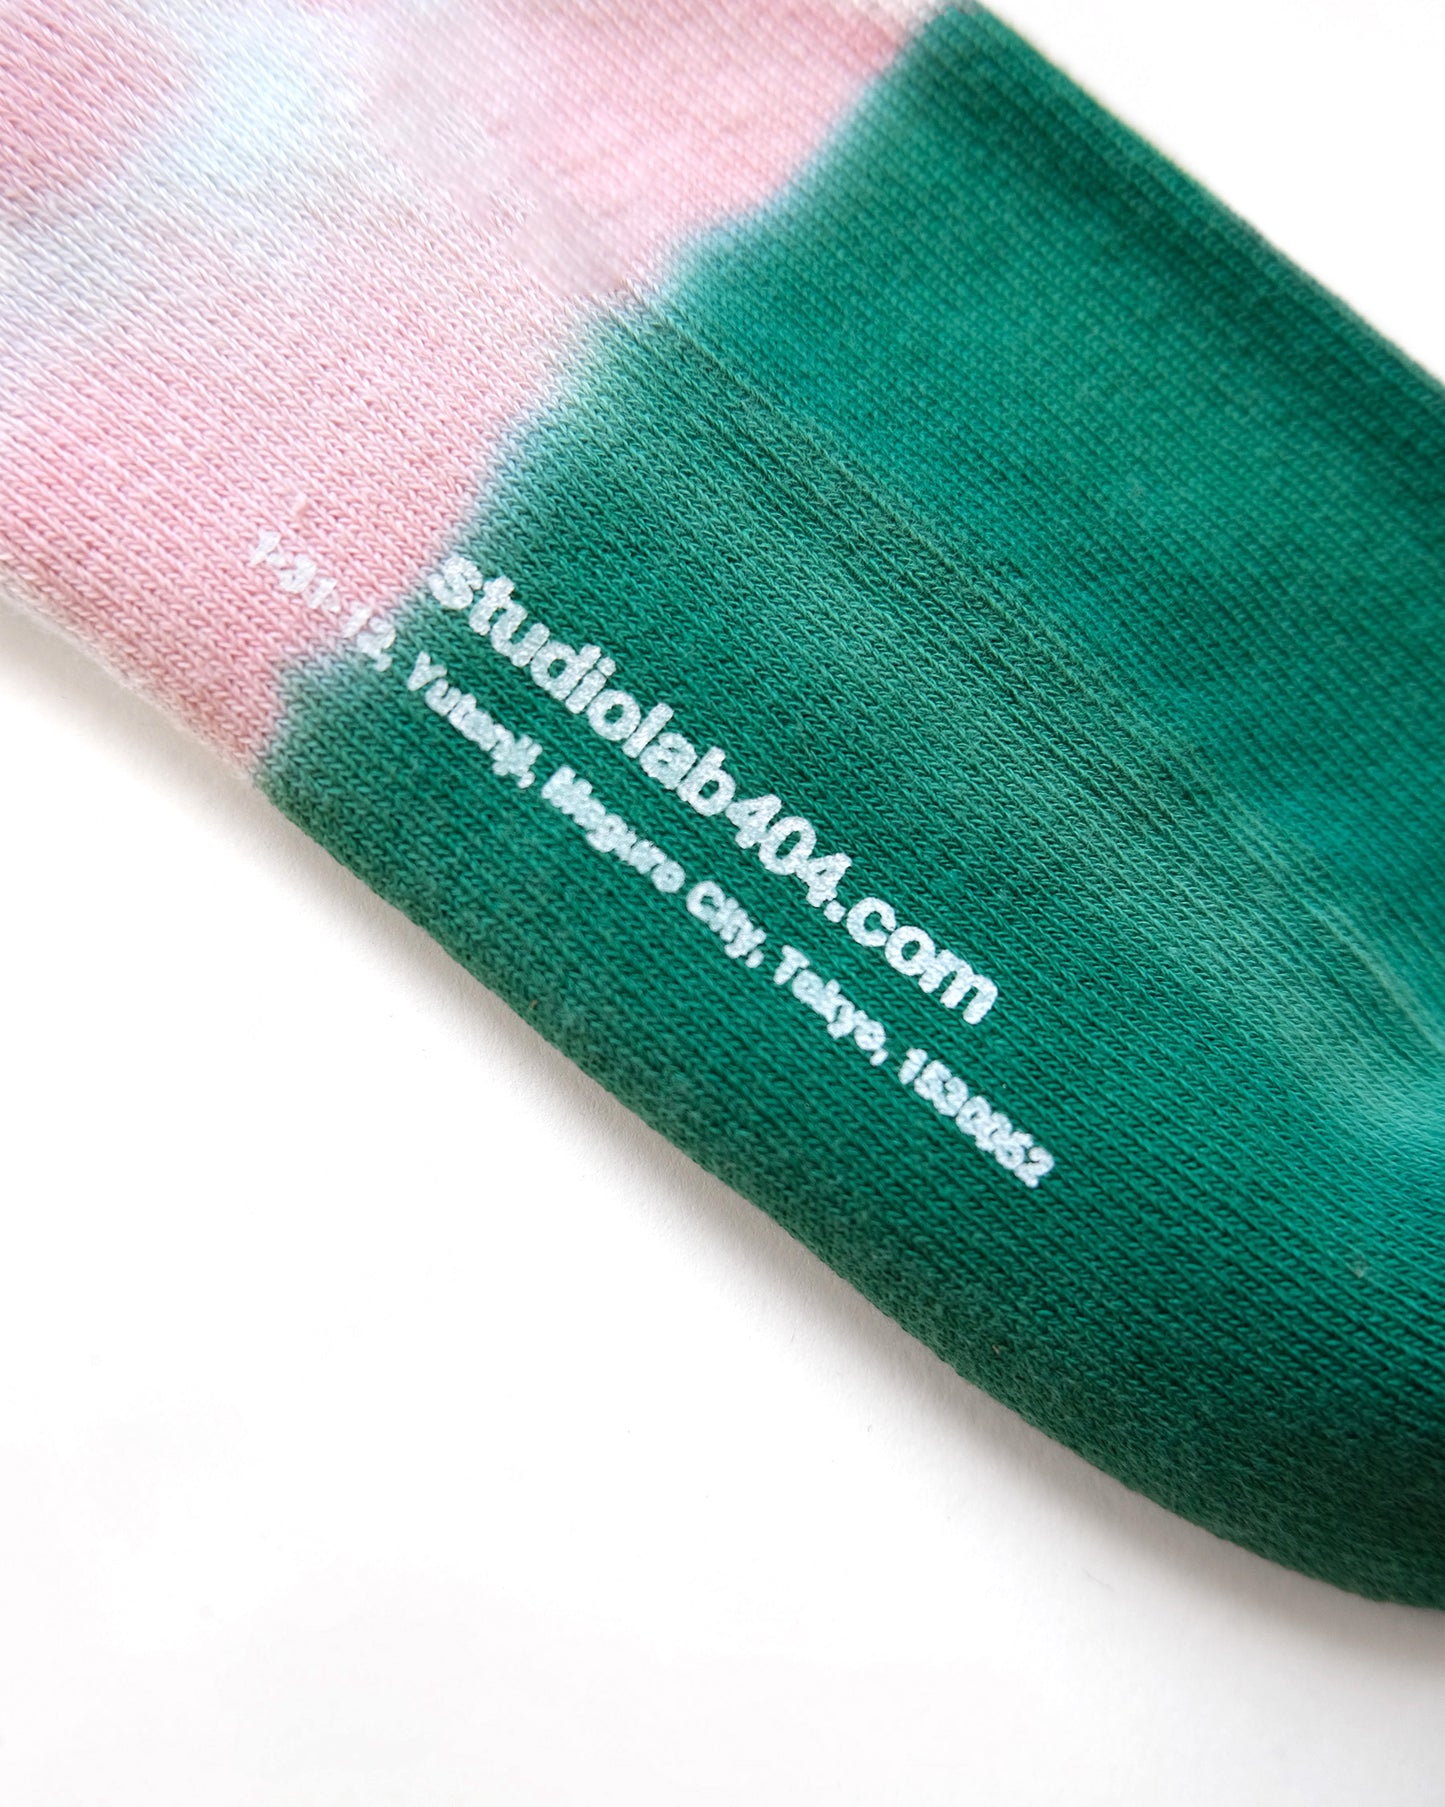 404 Gradation Pile Socks - Pink x Green